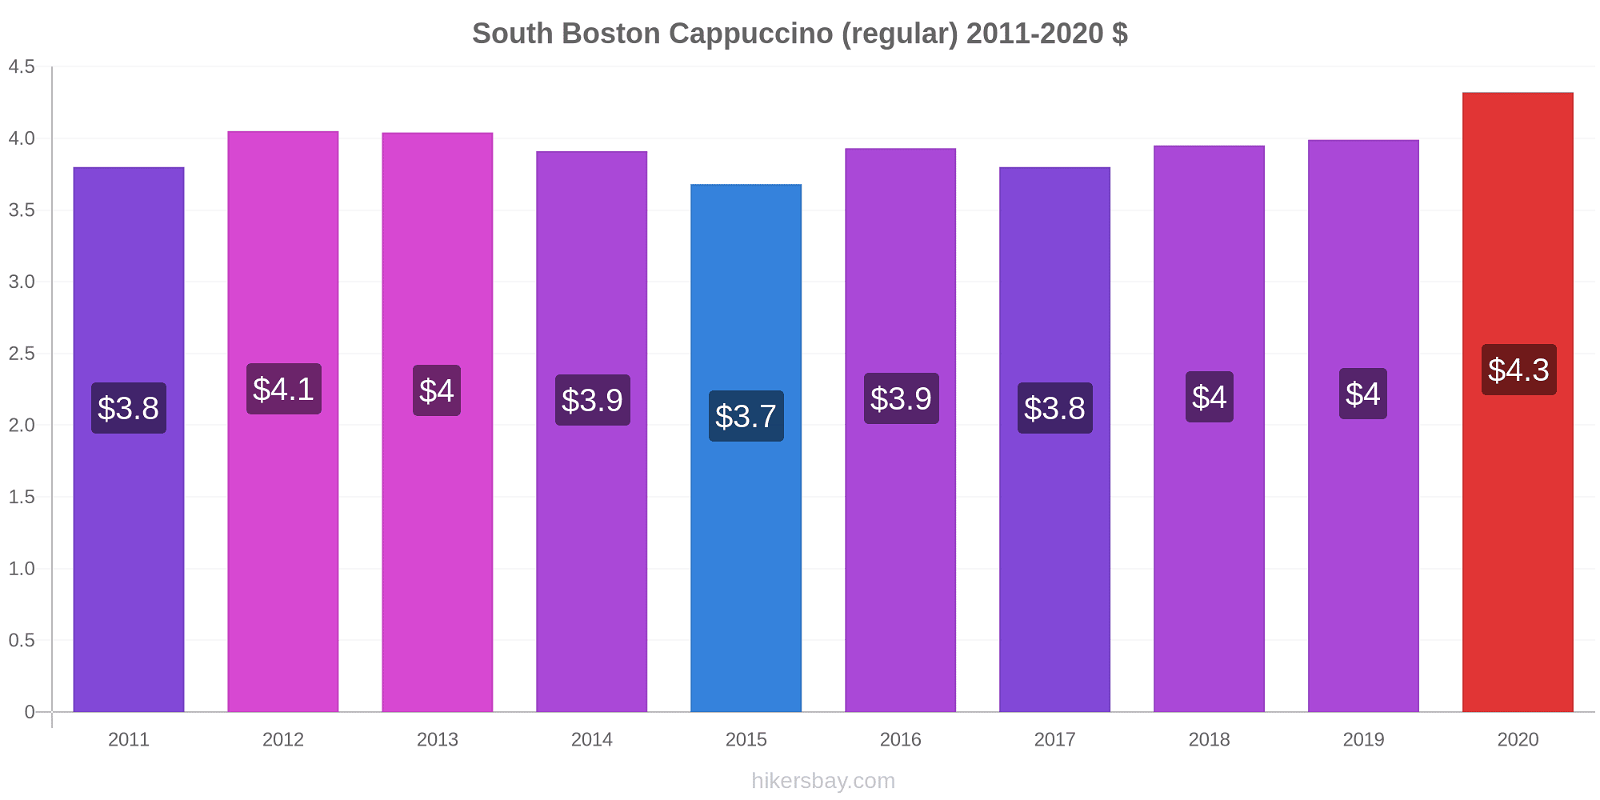 South Boston price changes Cappuccino (regular) hikersbay.com